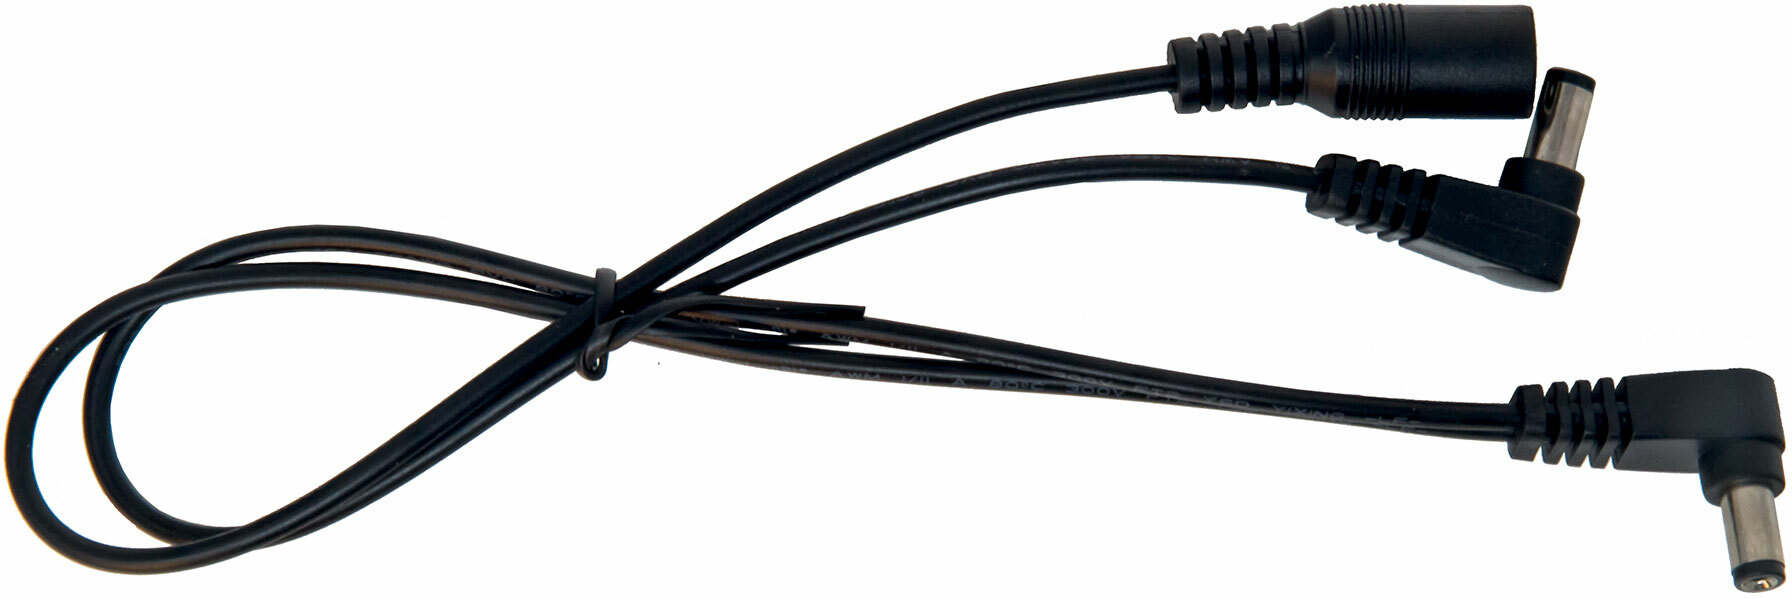 X-tone 2-way Chain Cable Alimentation Pedales - Adaptador de conexión - Main picture